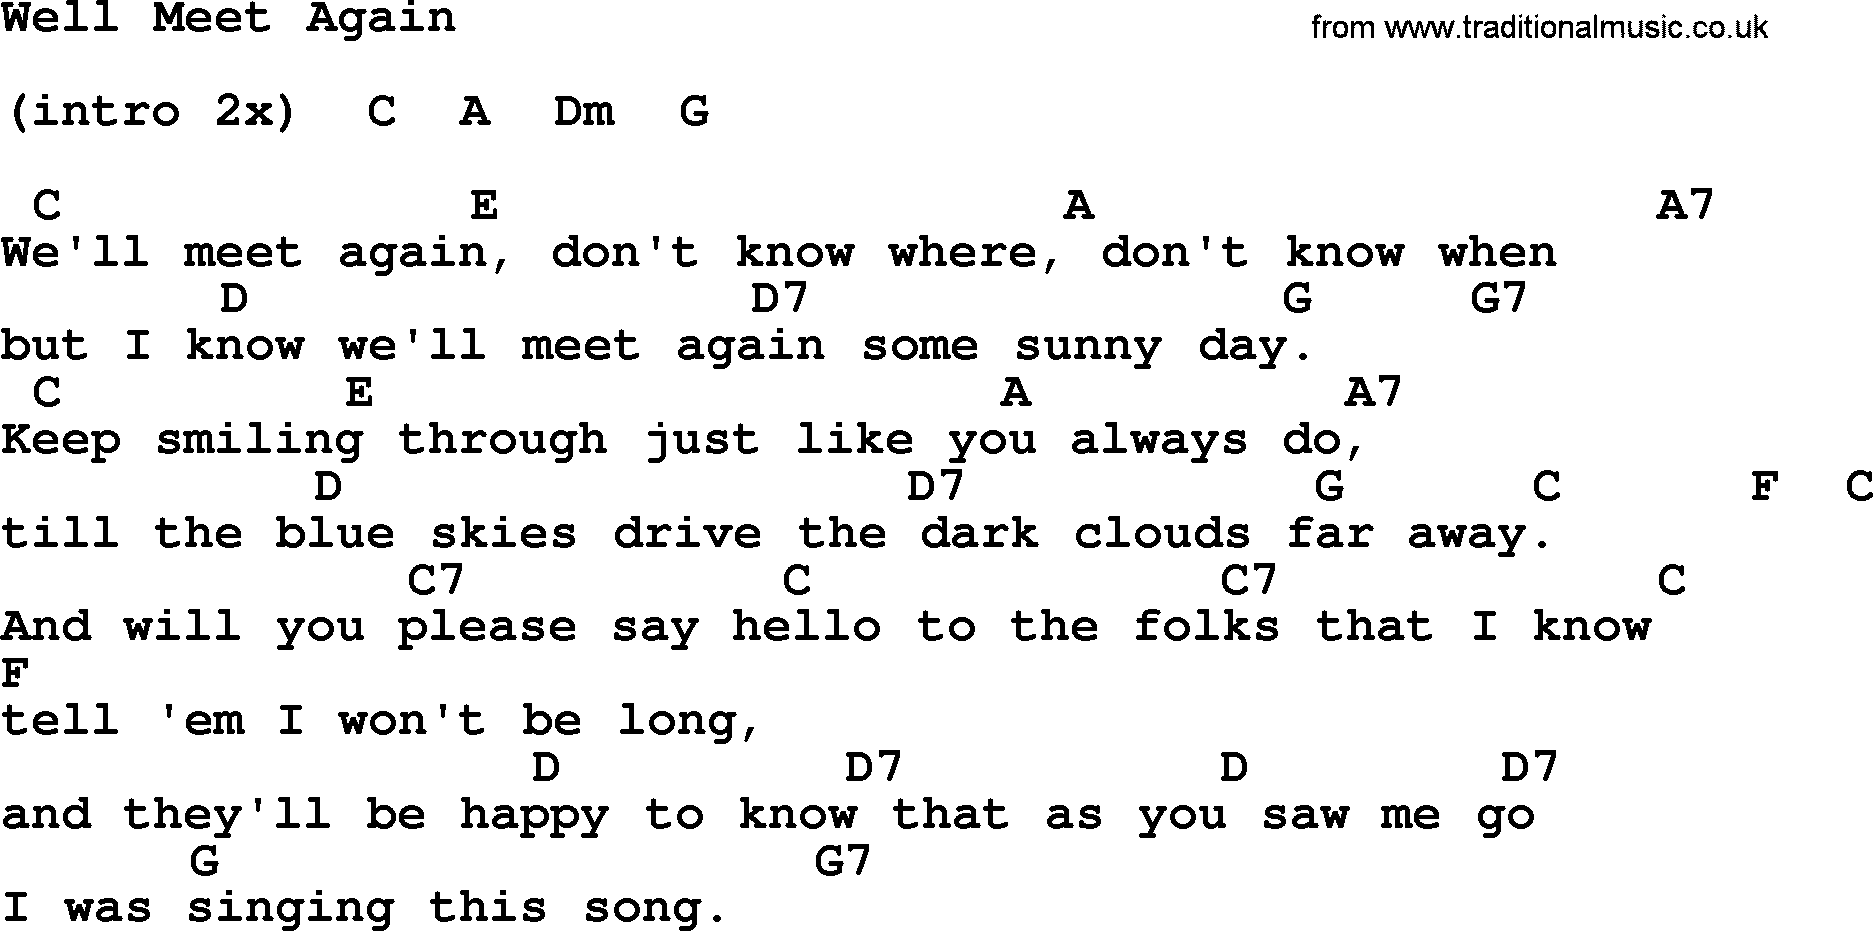 Johnny Cash song Well Meet Again, lyrics and chords